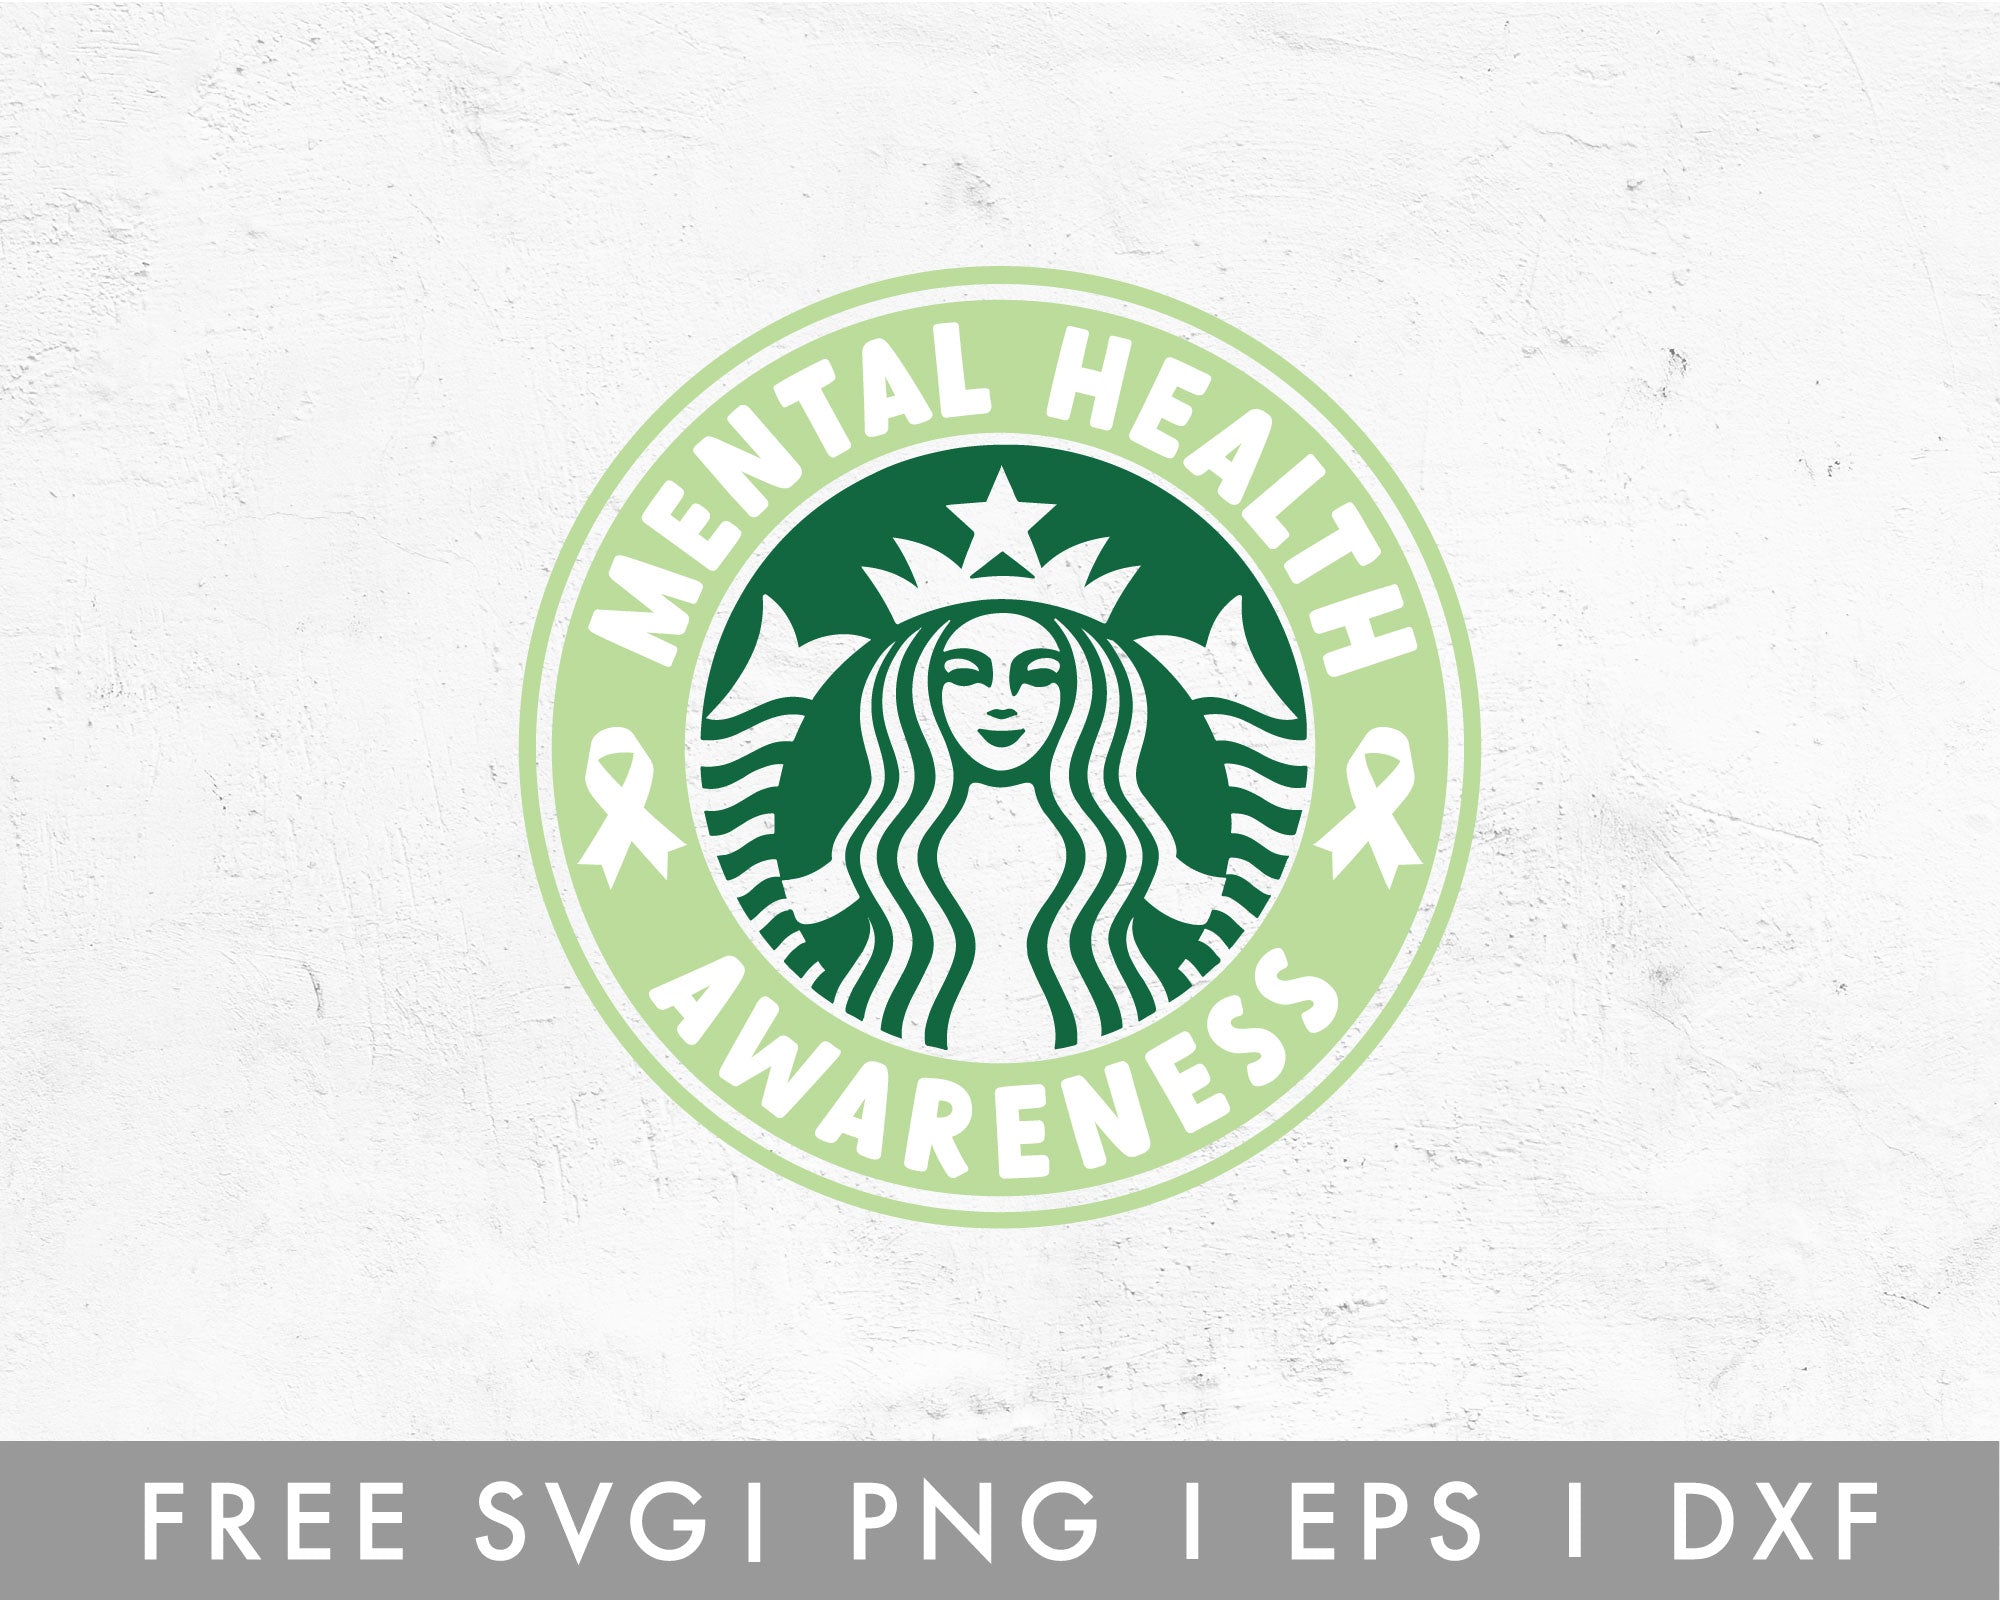 Starbucks SVG Free - Free SVG files